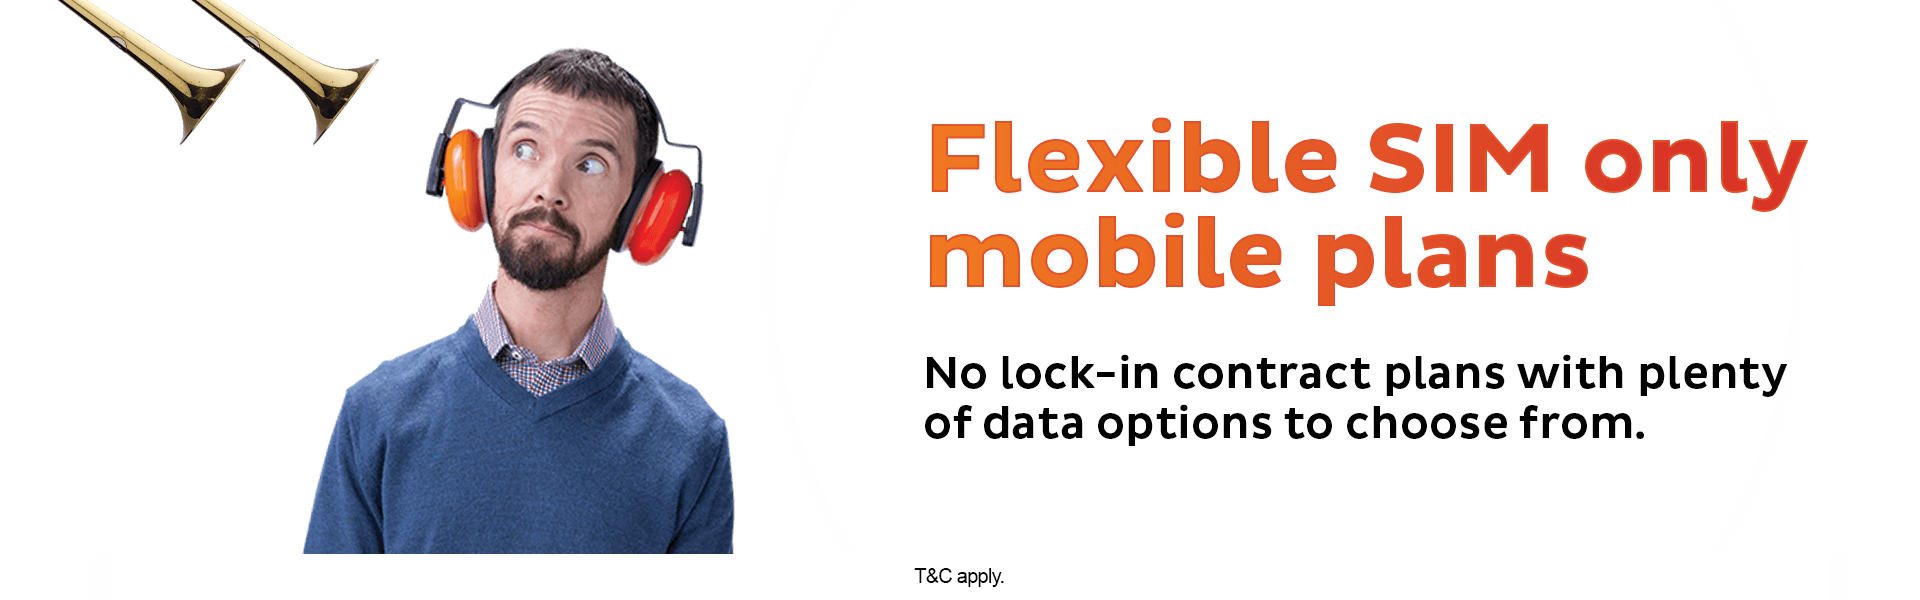 Flexible SIM only mobile plans